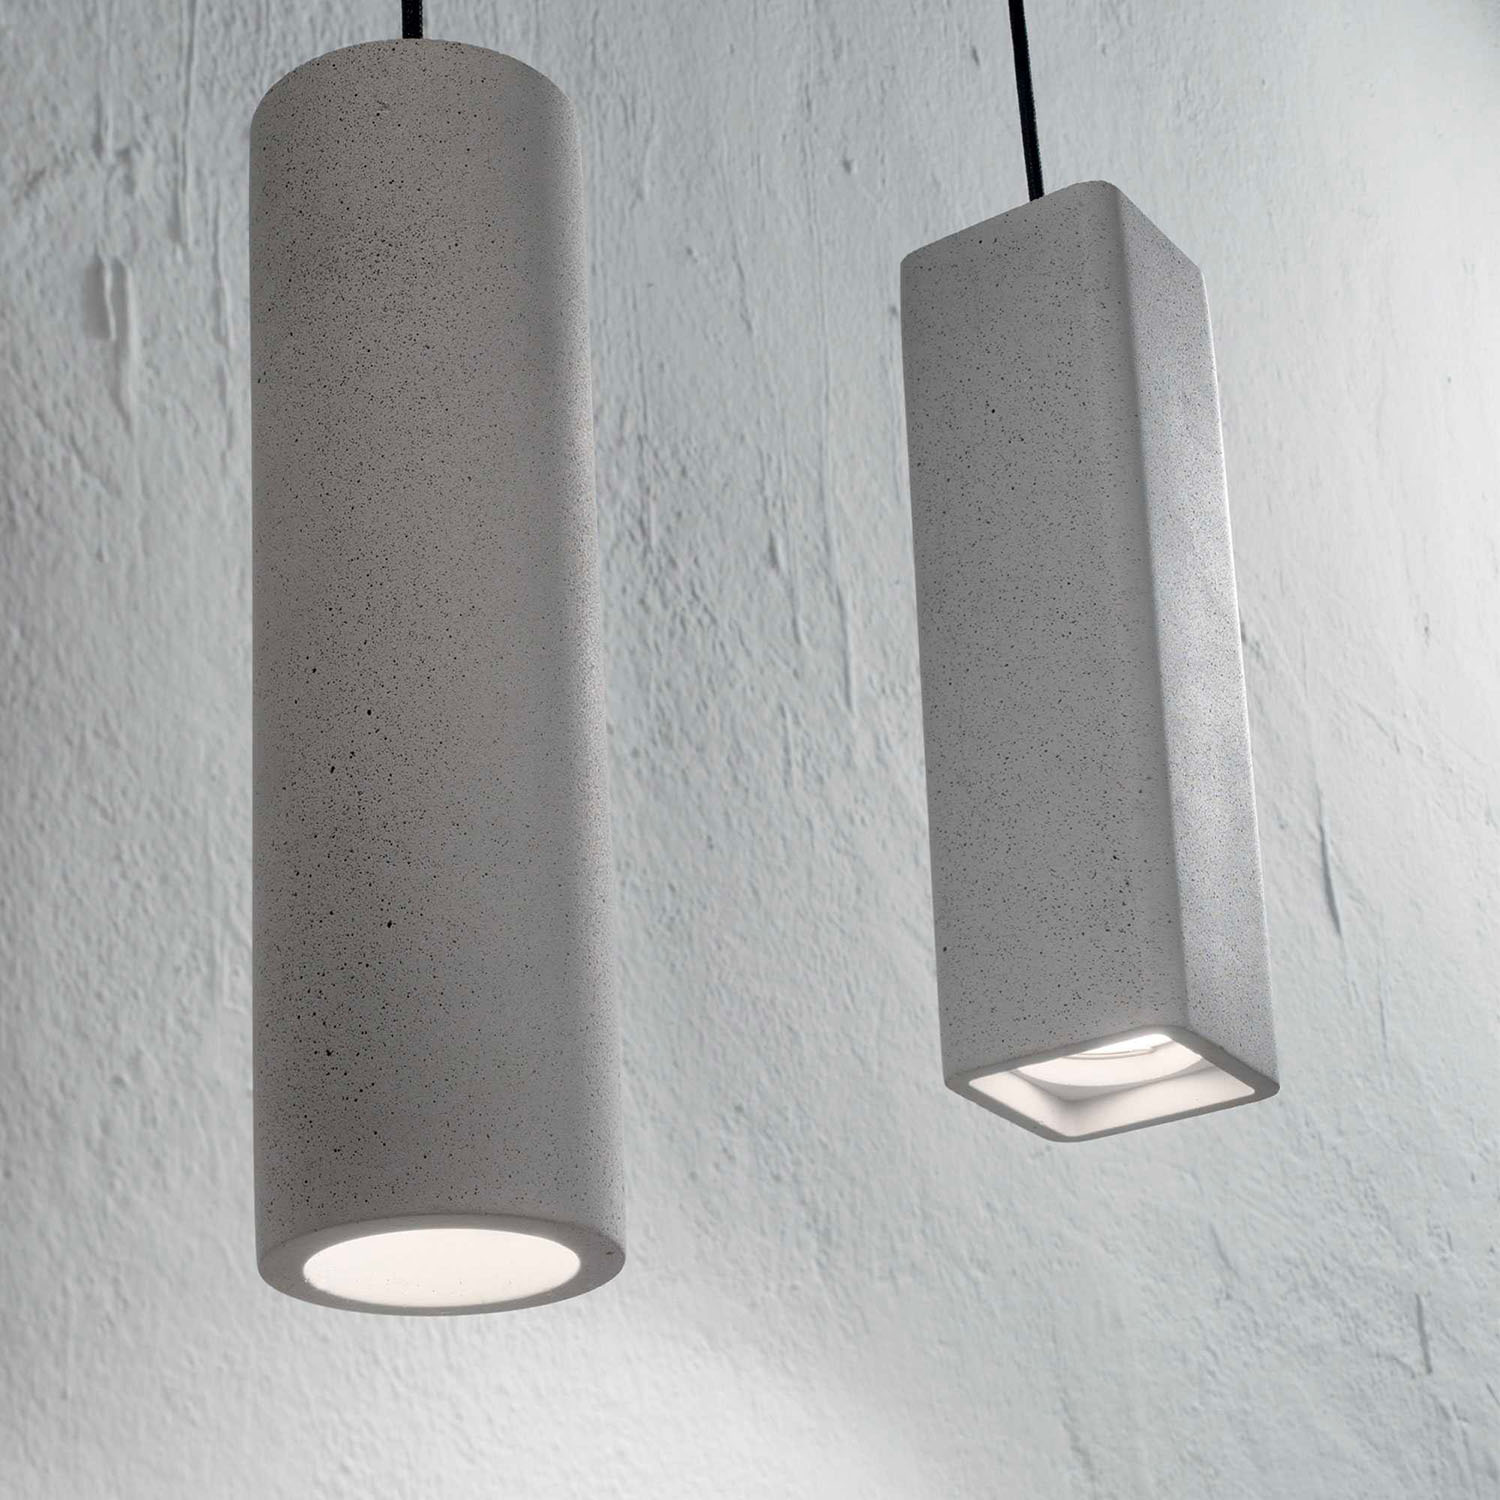 OAK - Designer concrete cylindrical pendant light